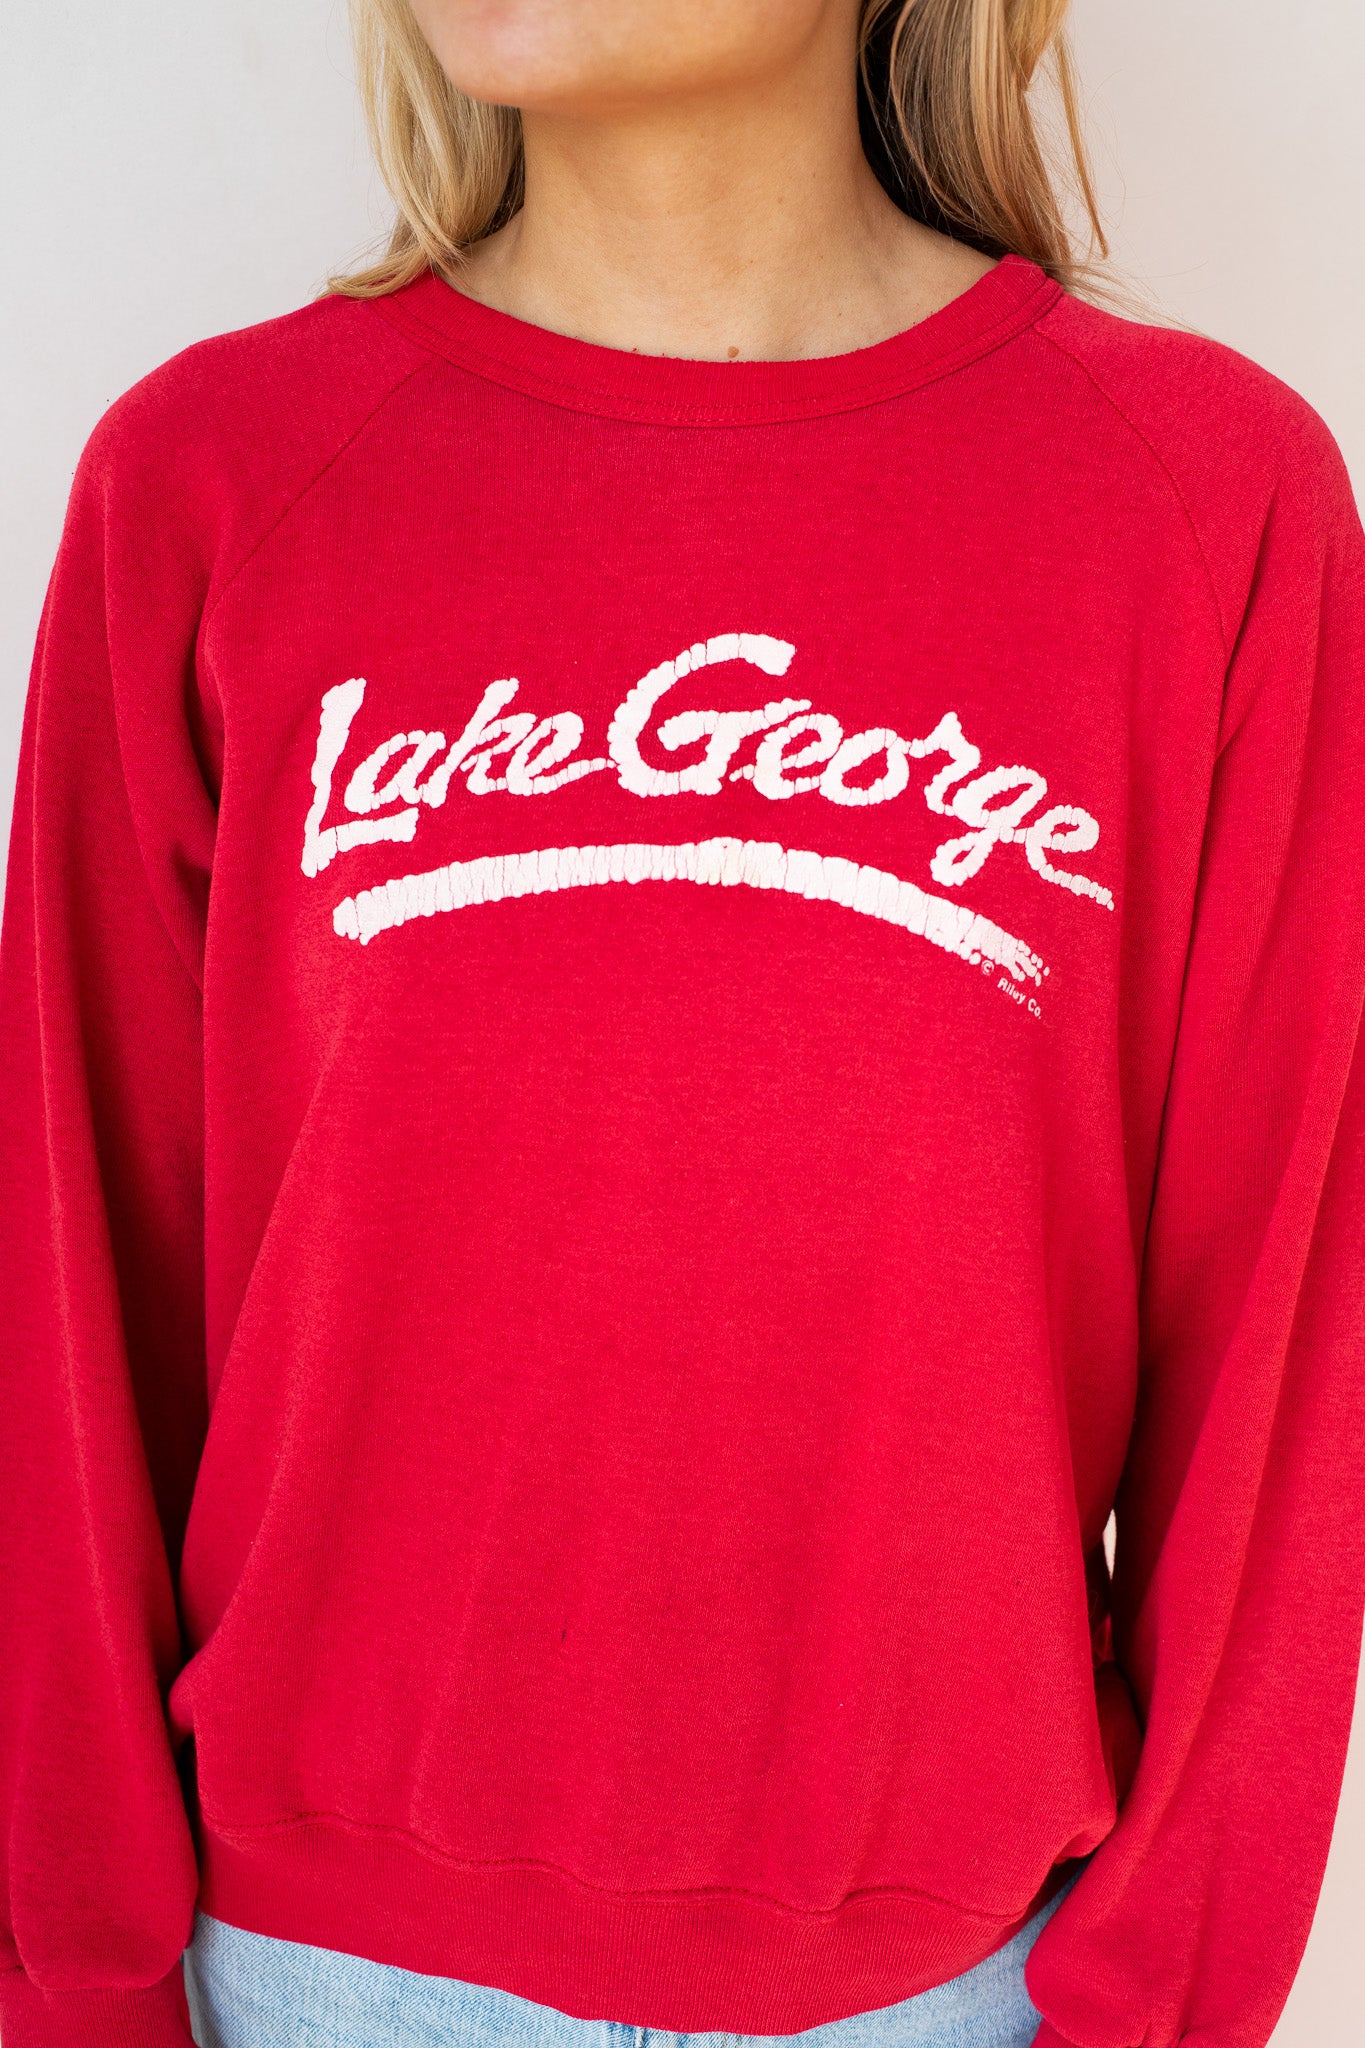 Lake George - Sweatshirt